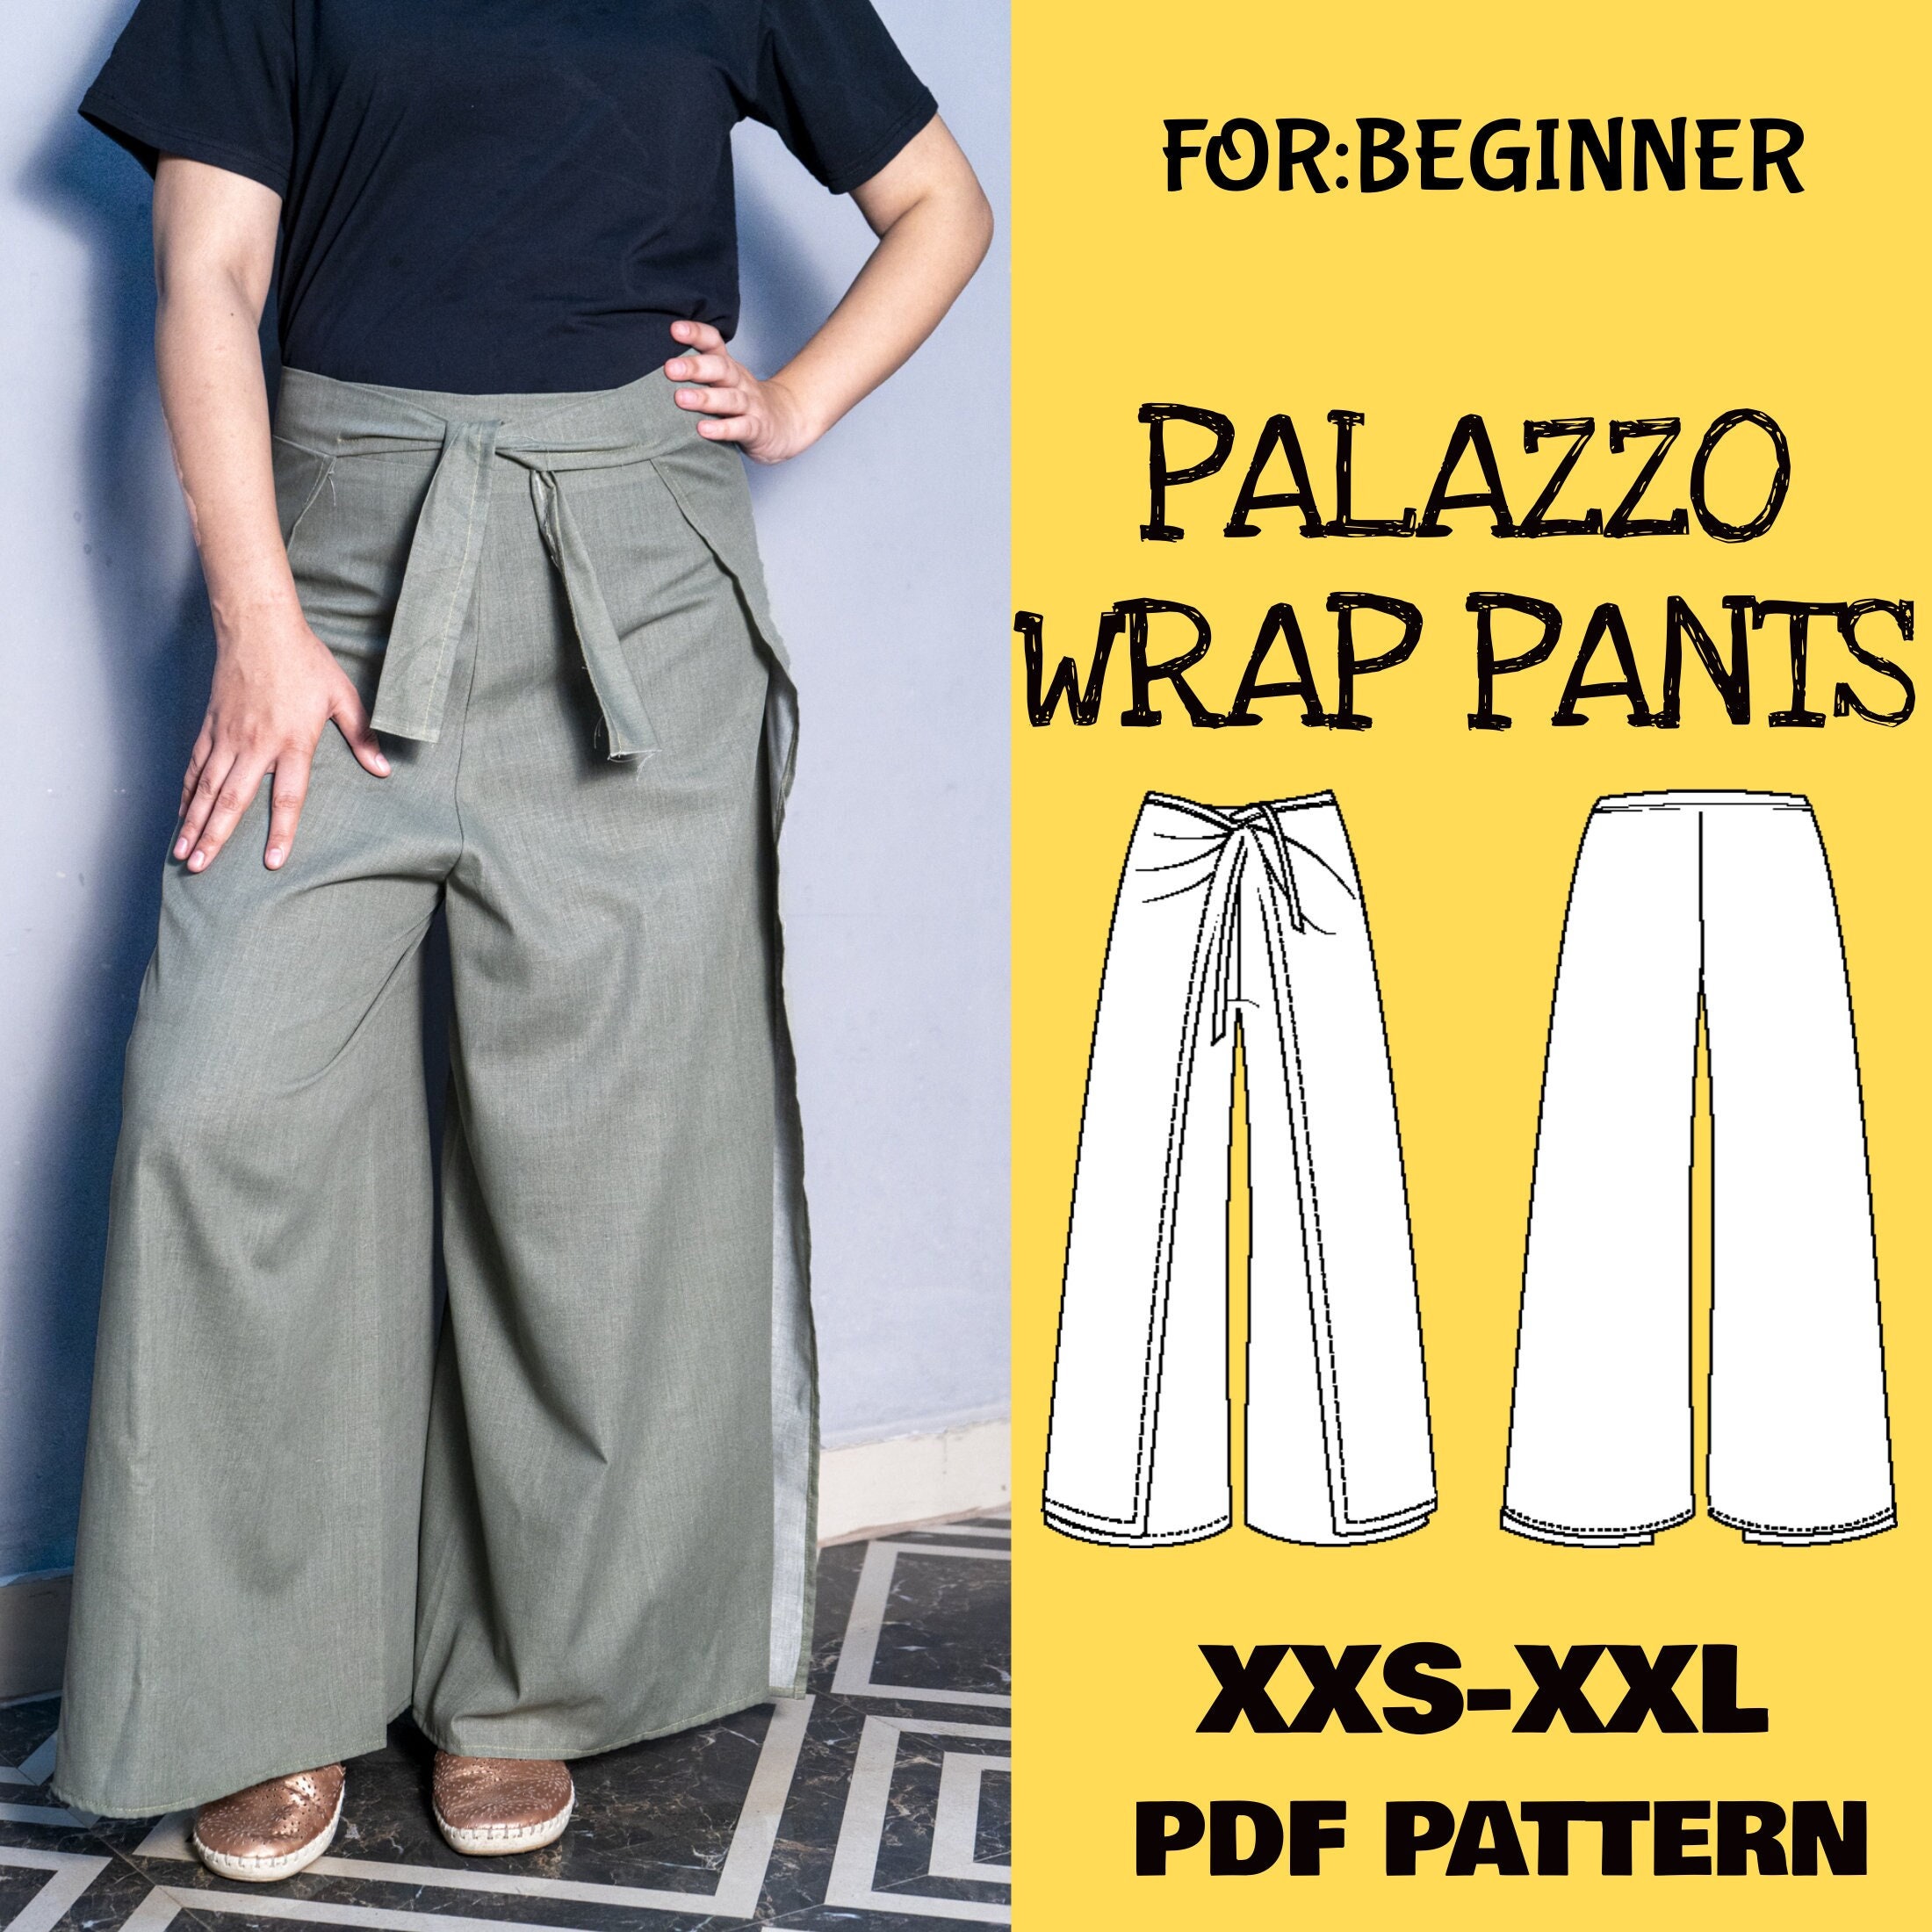  Linen Pants For Women Tall High Waist Wide Leg Palazzo Lounge  Pants For Women Smocked Elastic Waist Loose : ביגוד, נעליים ותכשיטים